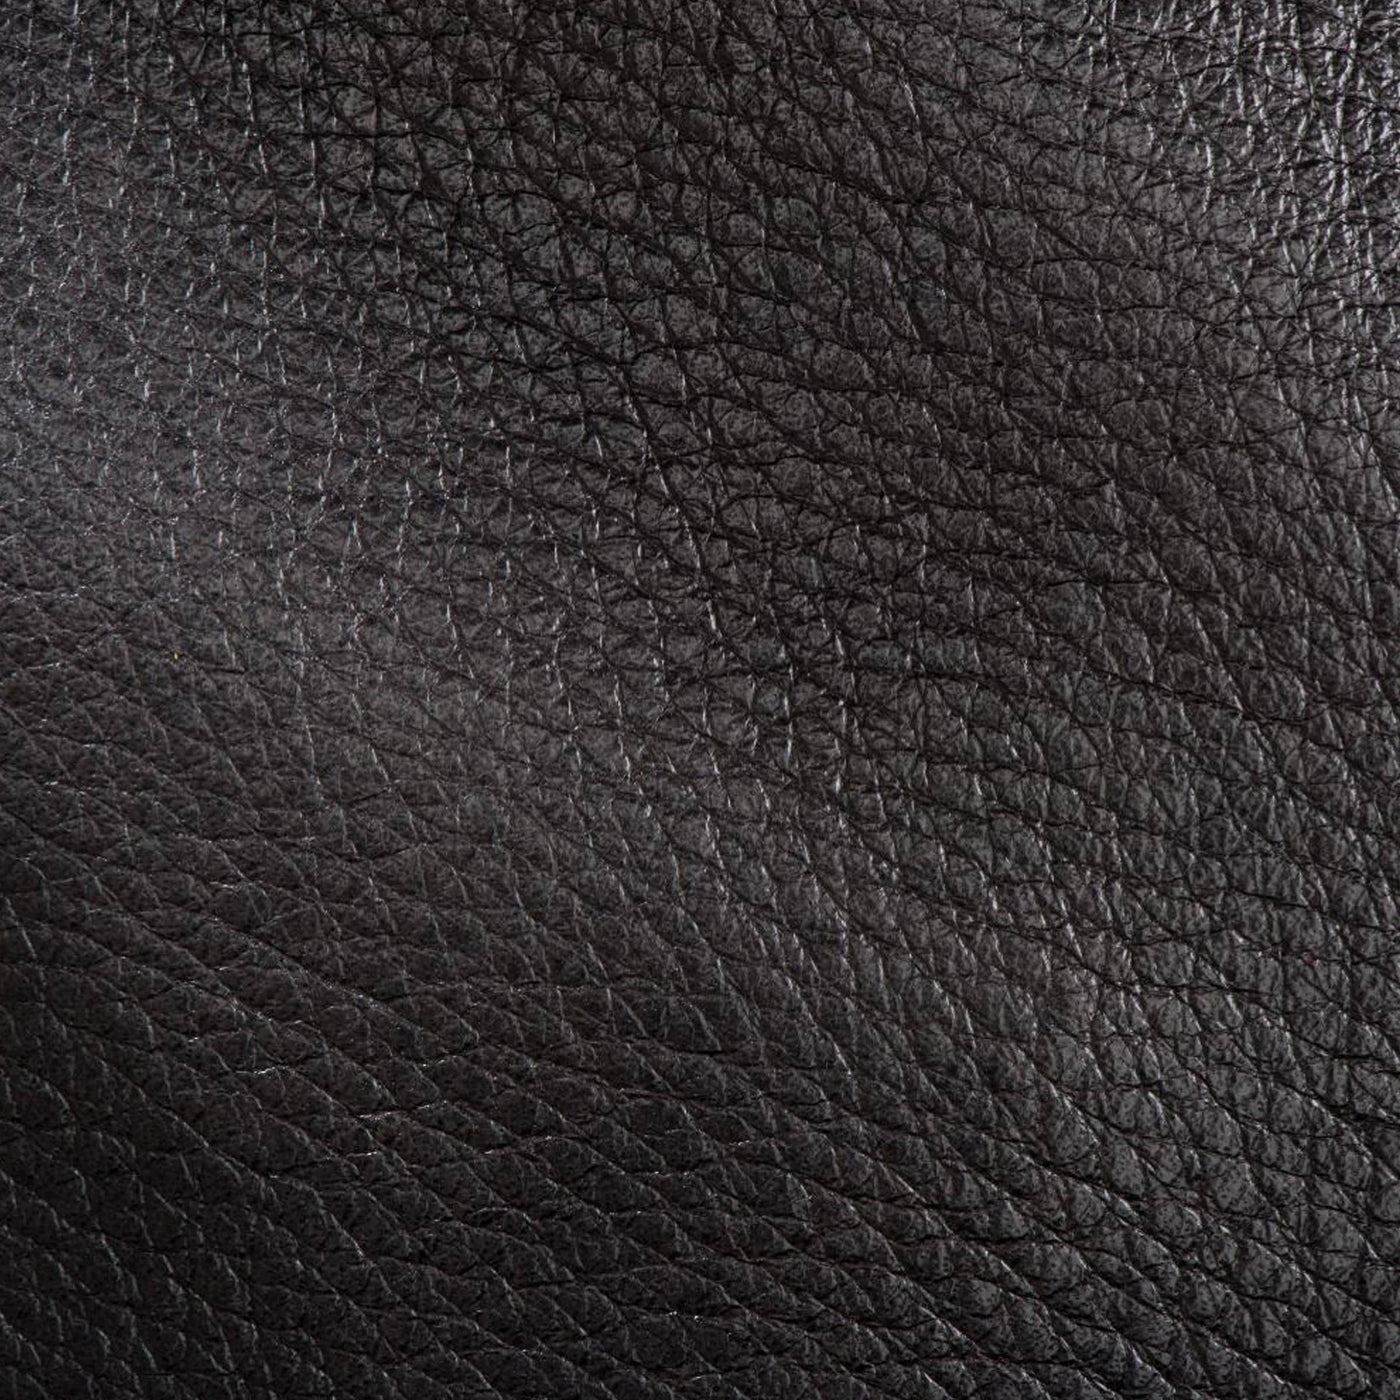 BRAVE Leather Samples